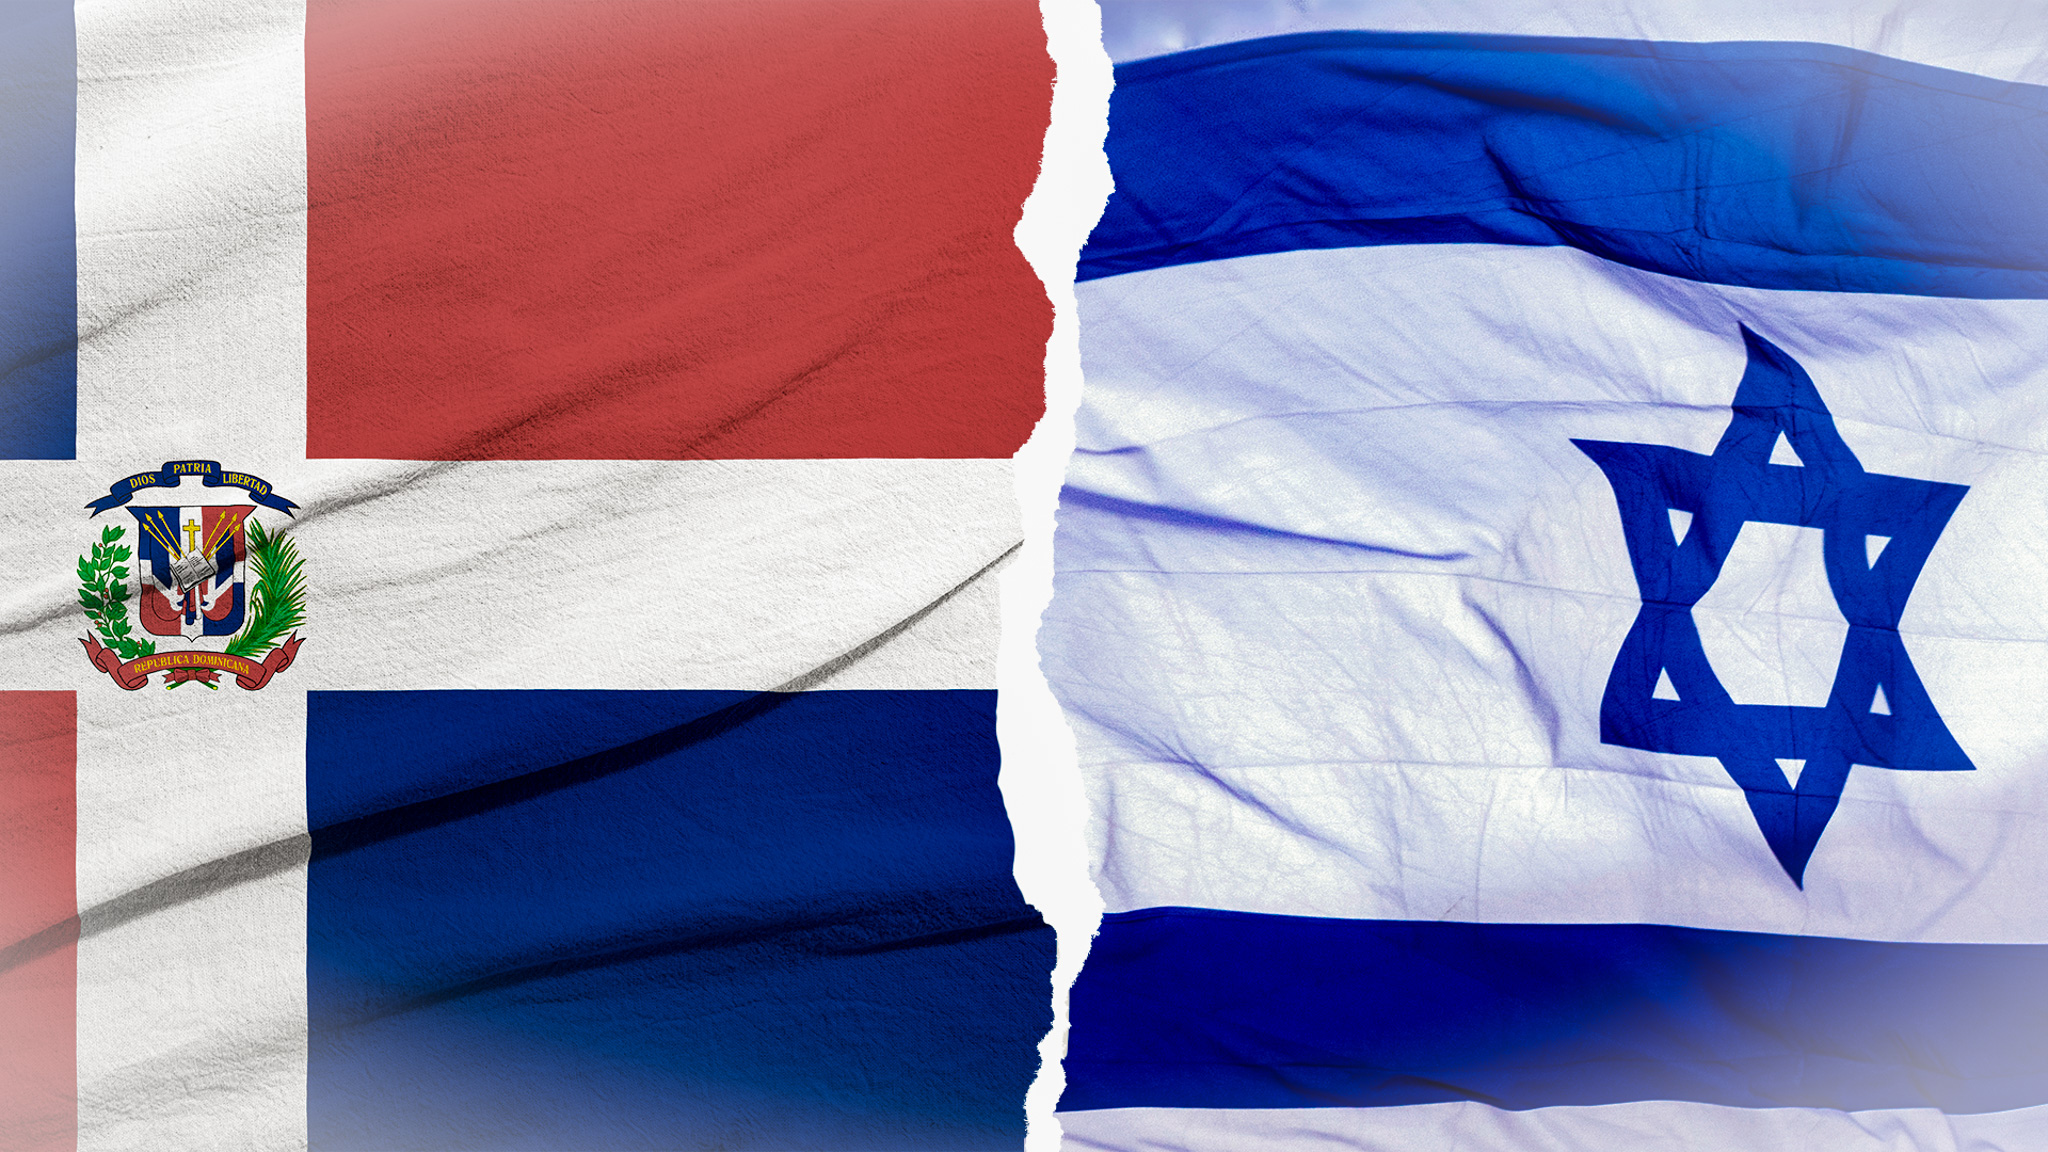 Photo Gallery: Dominican Republic vs. Israel